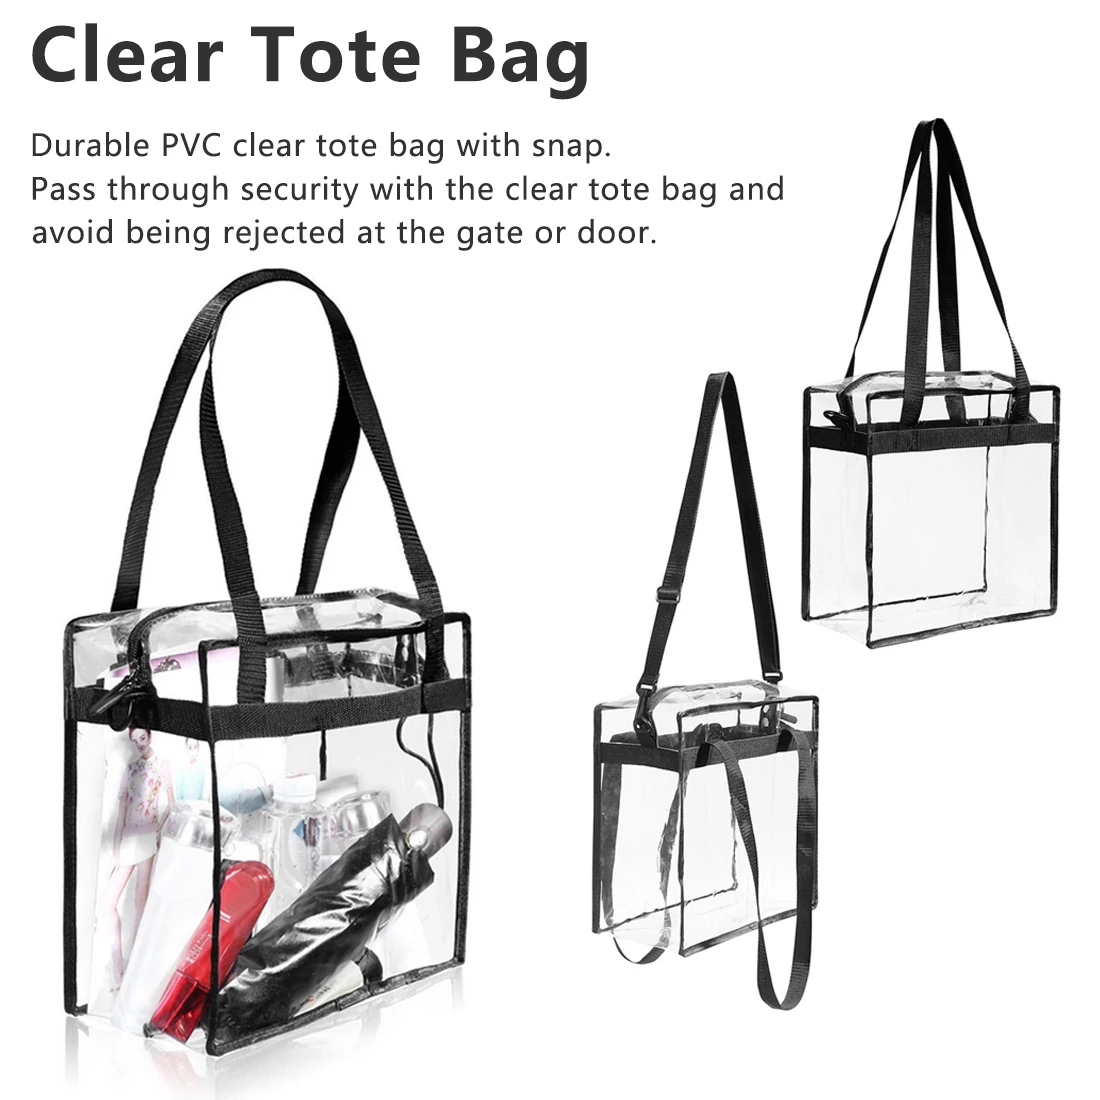 

Environmentally Storage Bags Stadium Approved Clear Tote Bag PVC Transparent Shopping Bag Shoulder Handbag